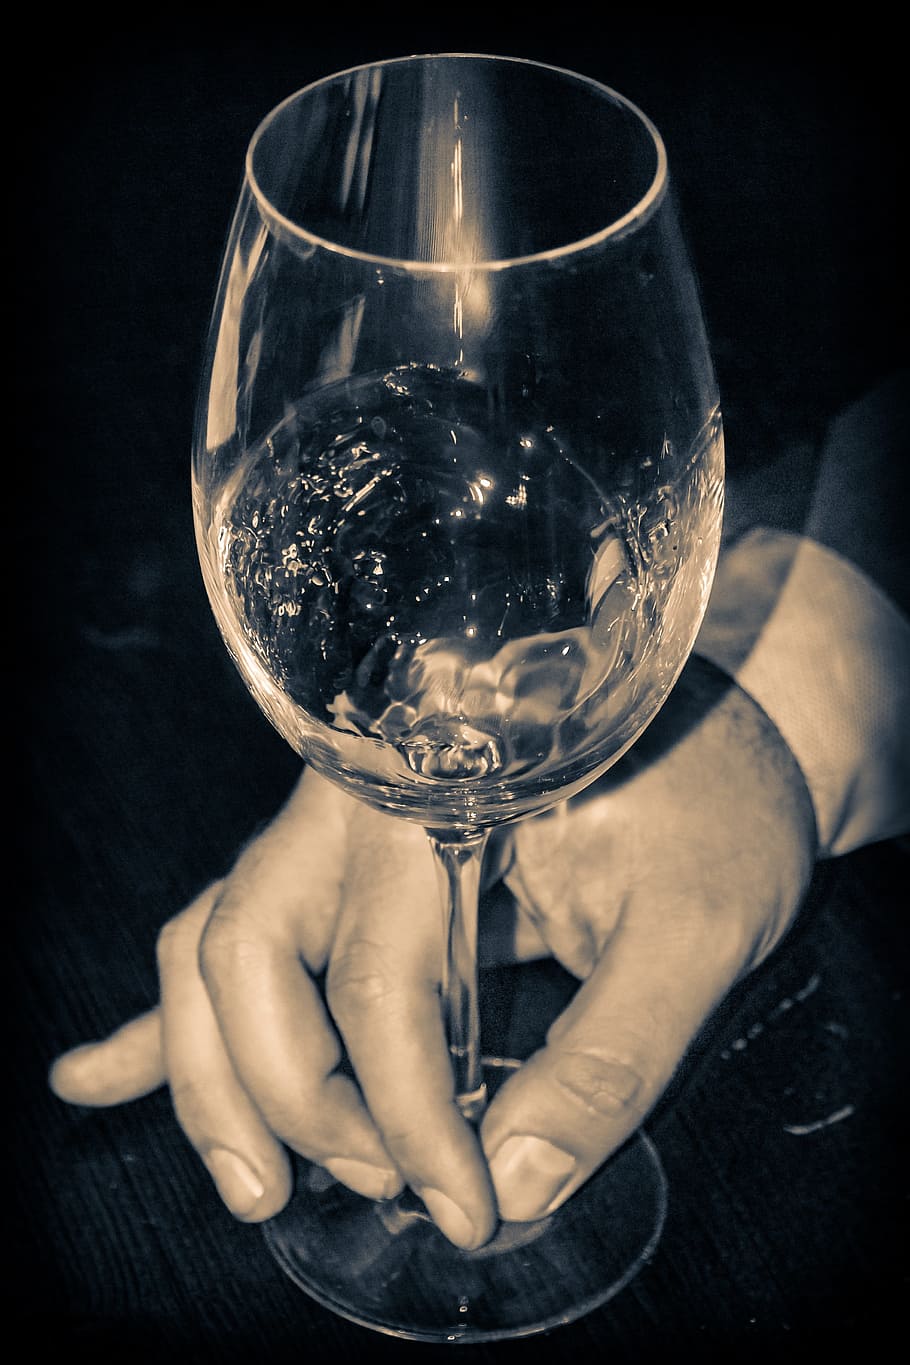 persona, tenencia, claro, copa de vino, vino blanco, copas de vino, vaso, vino, alcohol, mano humana